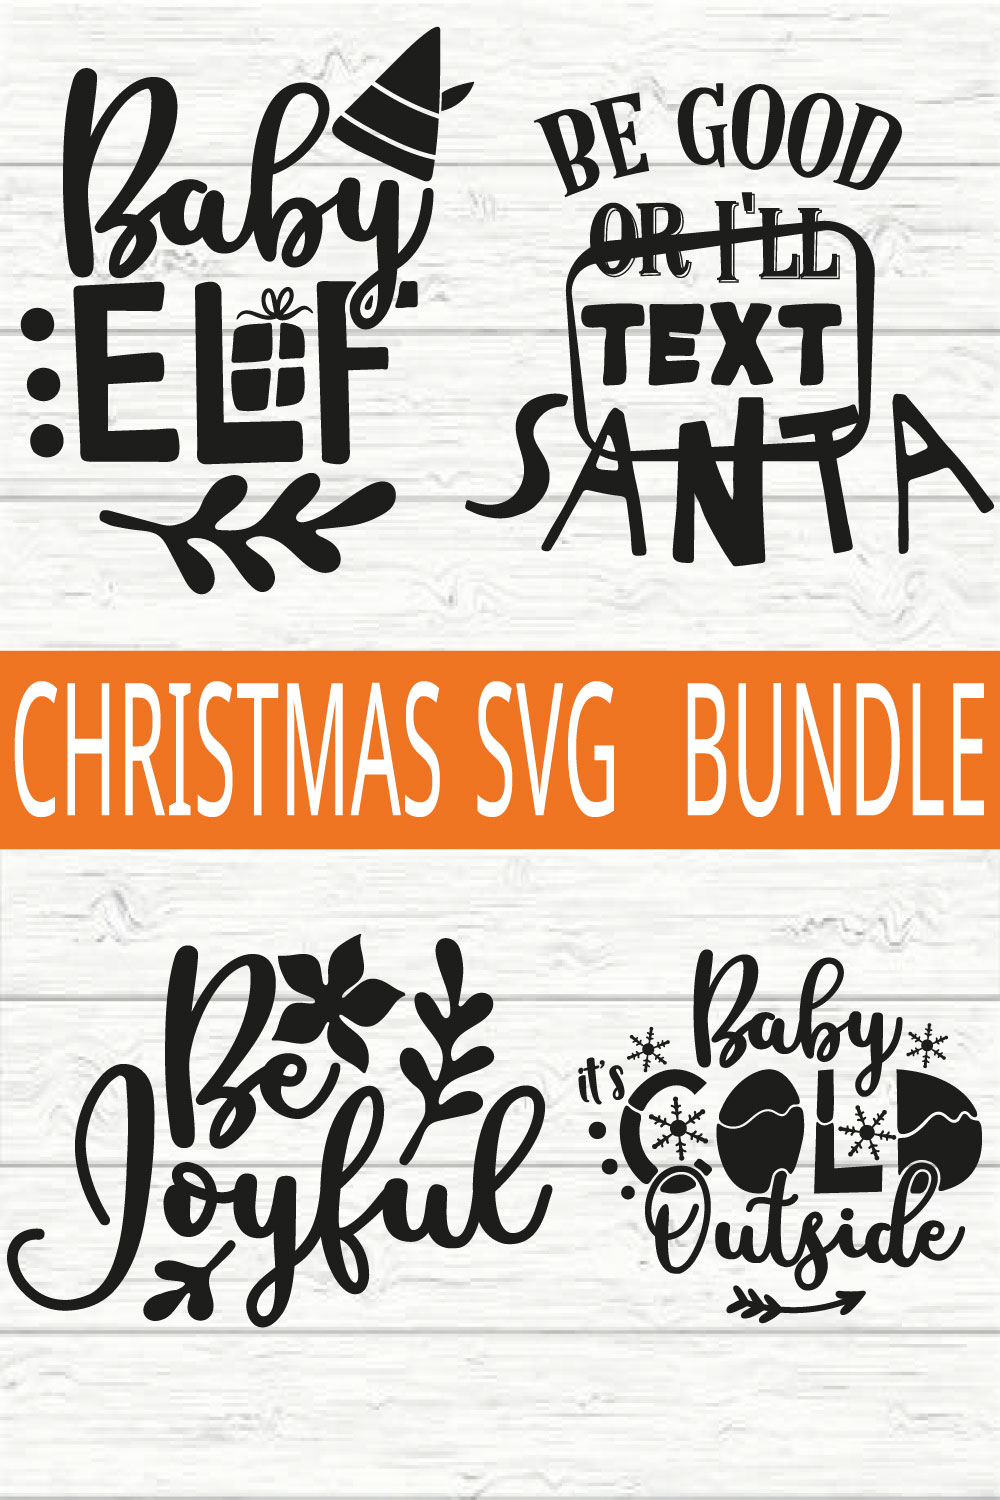 Christmas Svg Bundle vol 2 pinterest preview image.